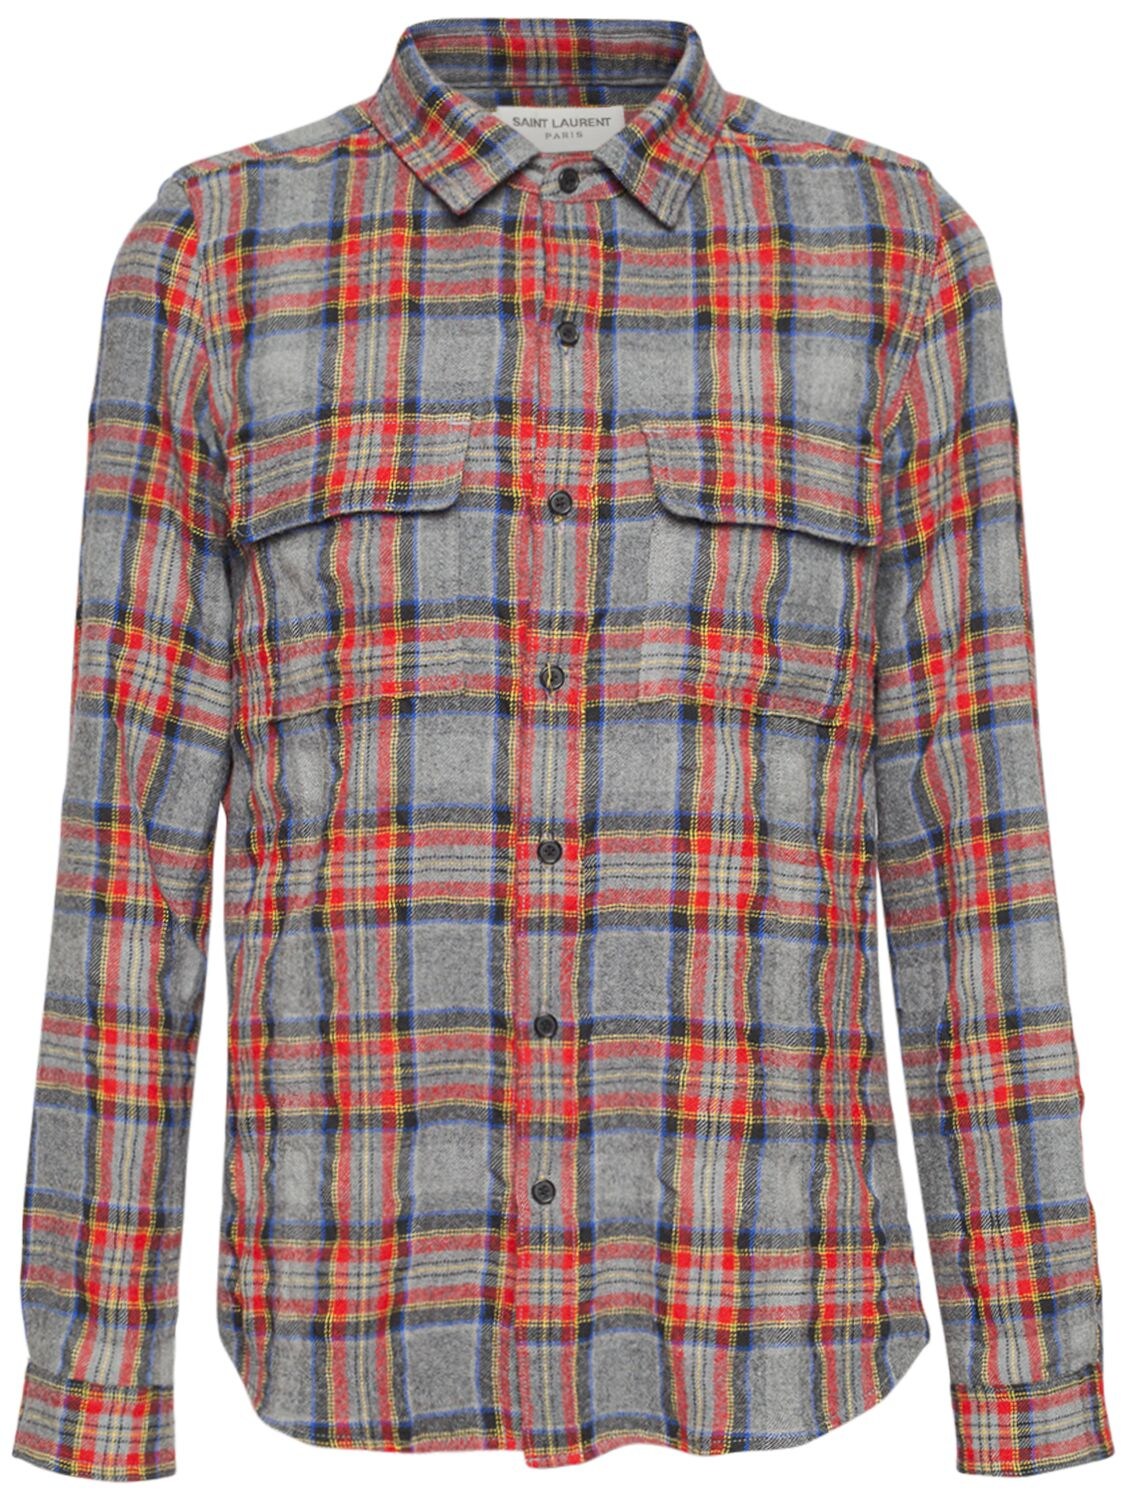 ReadyFit Tartan Check Slim Long Sleeve Shirts Button Down Shirts for Men Mens Plaid Shirts